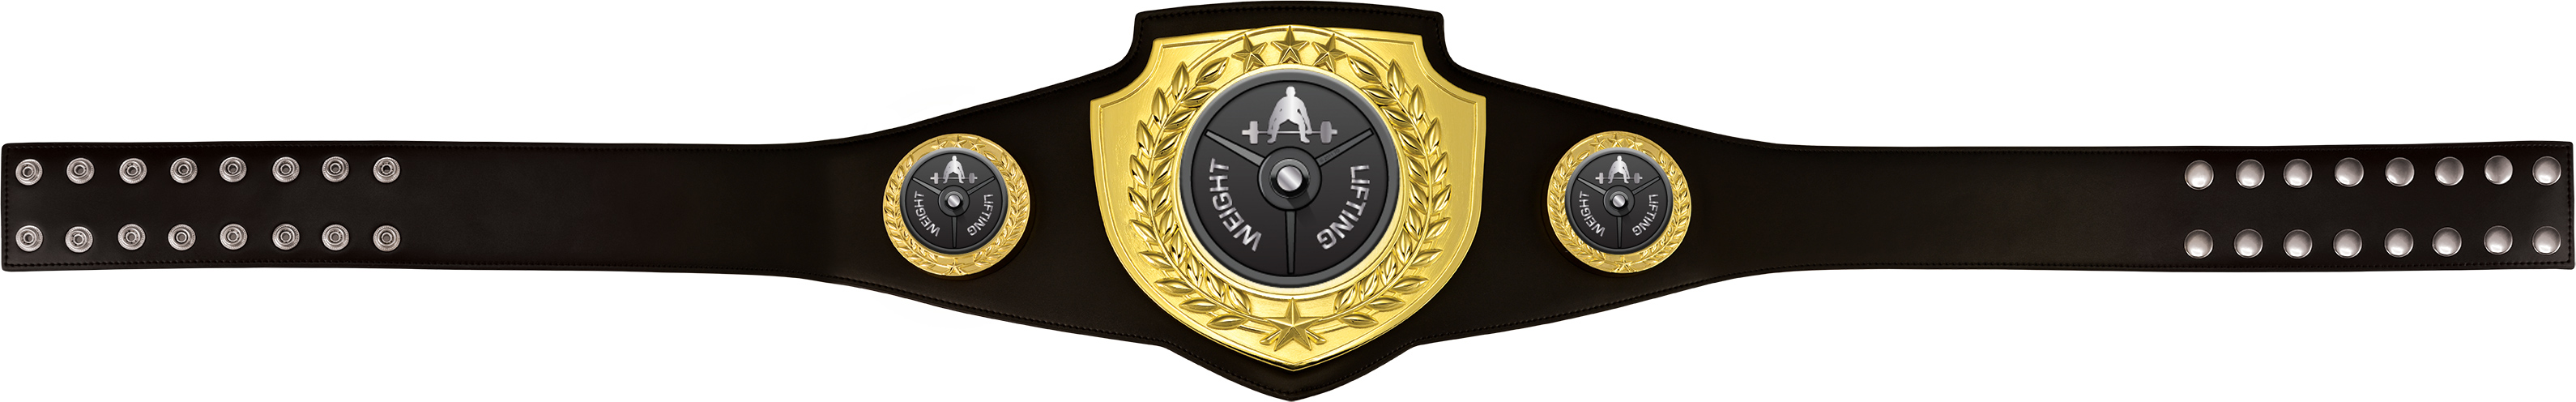 Weigh Lifting Champion Shield Award Belt